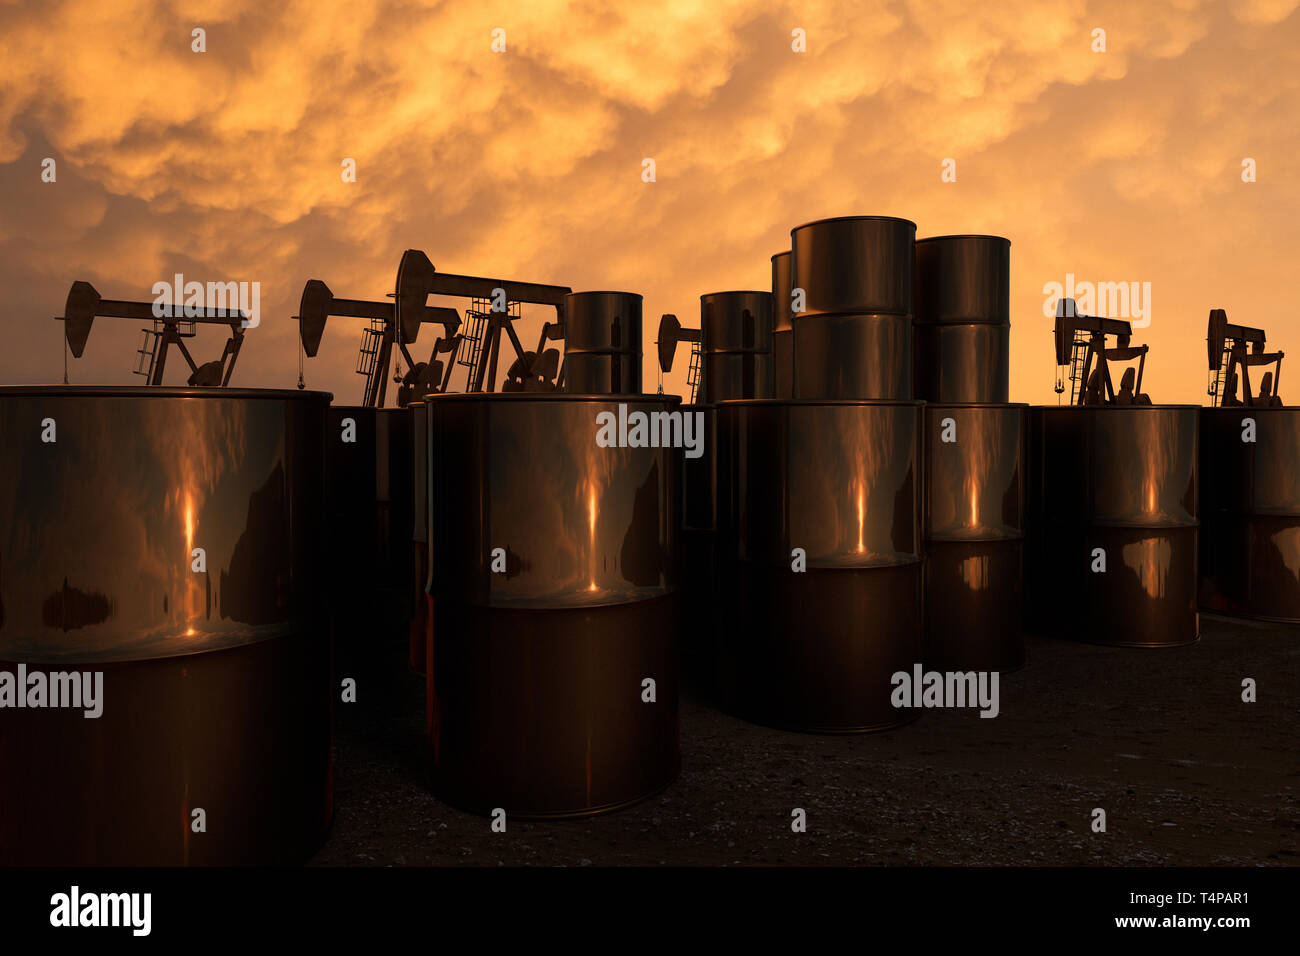 3D rendering of pump jacks in an oil field Stock Photo